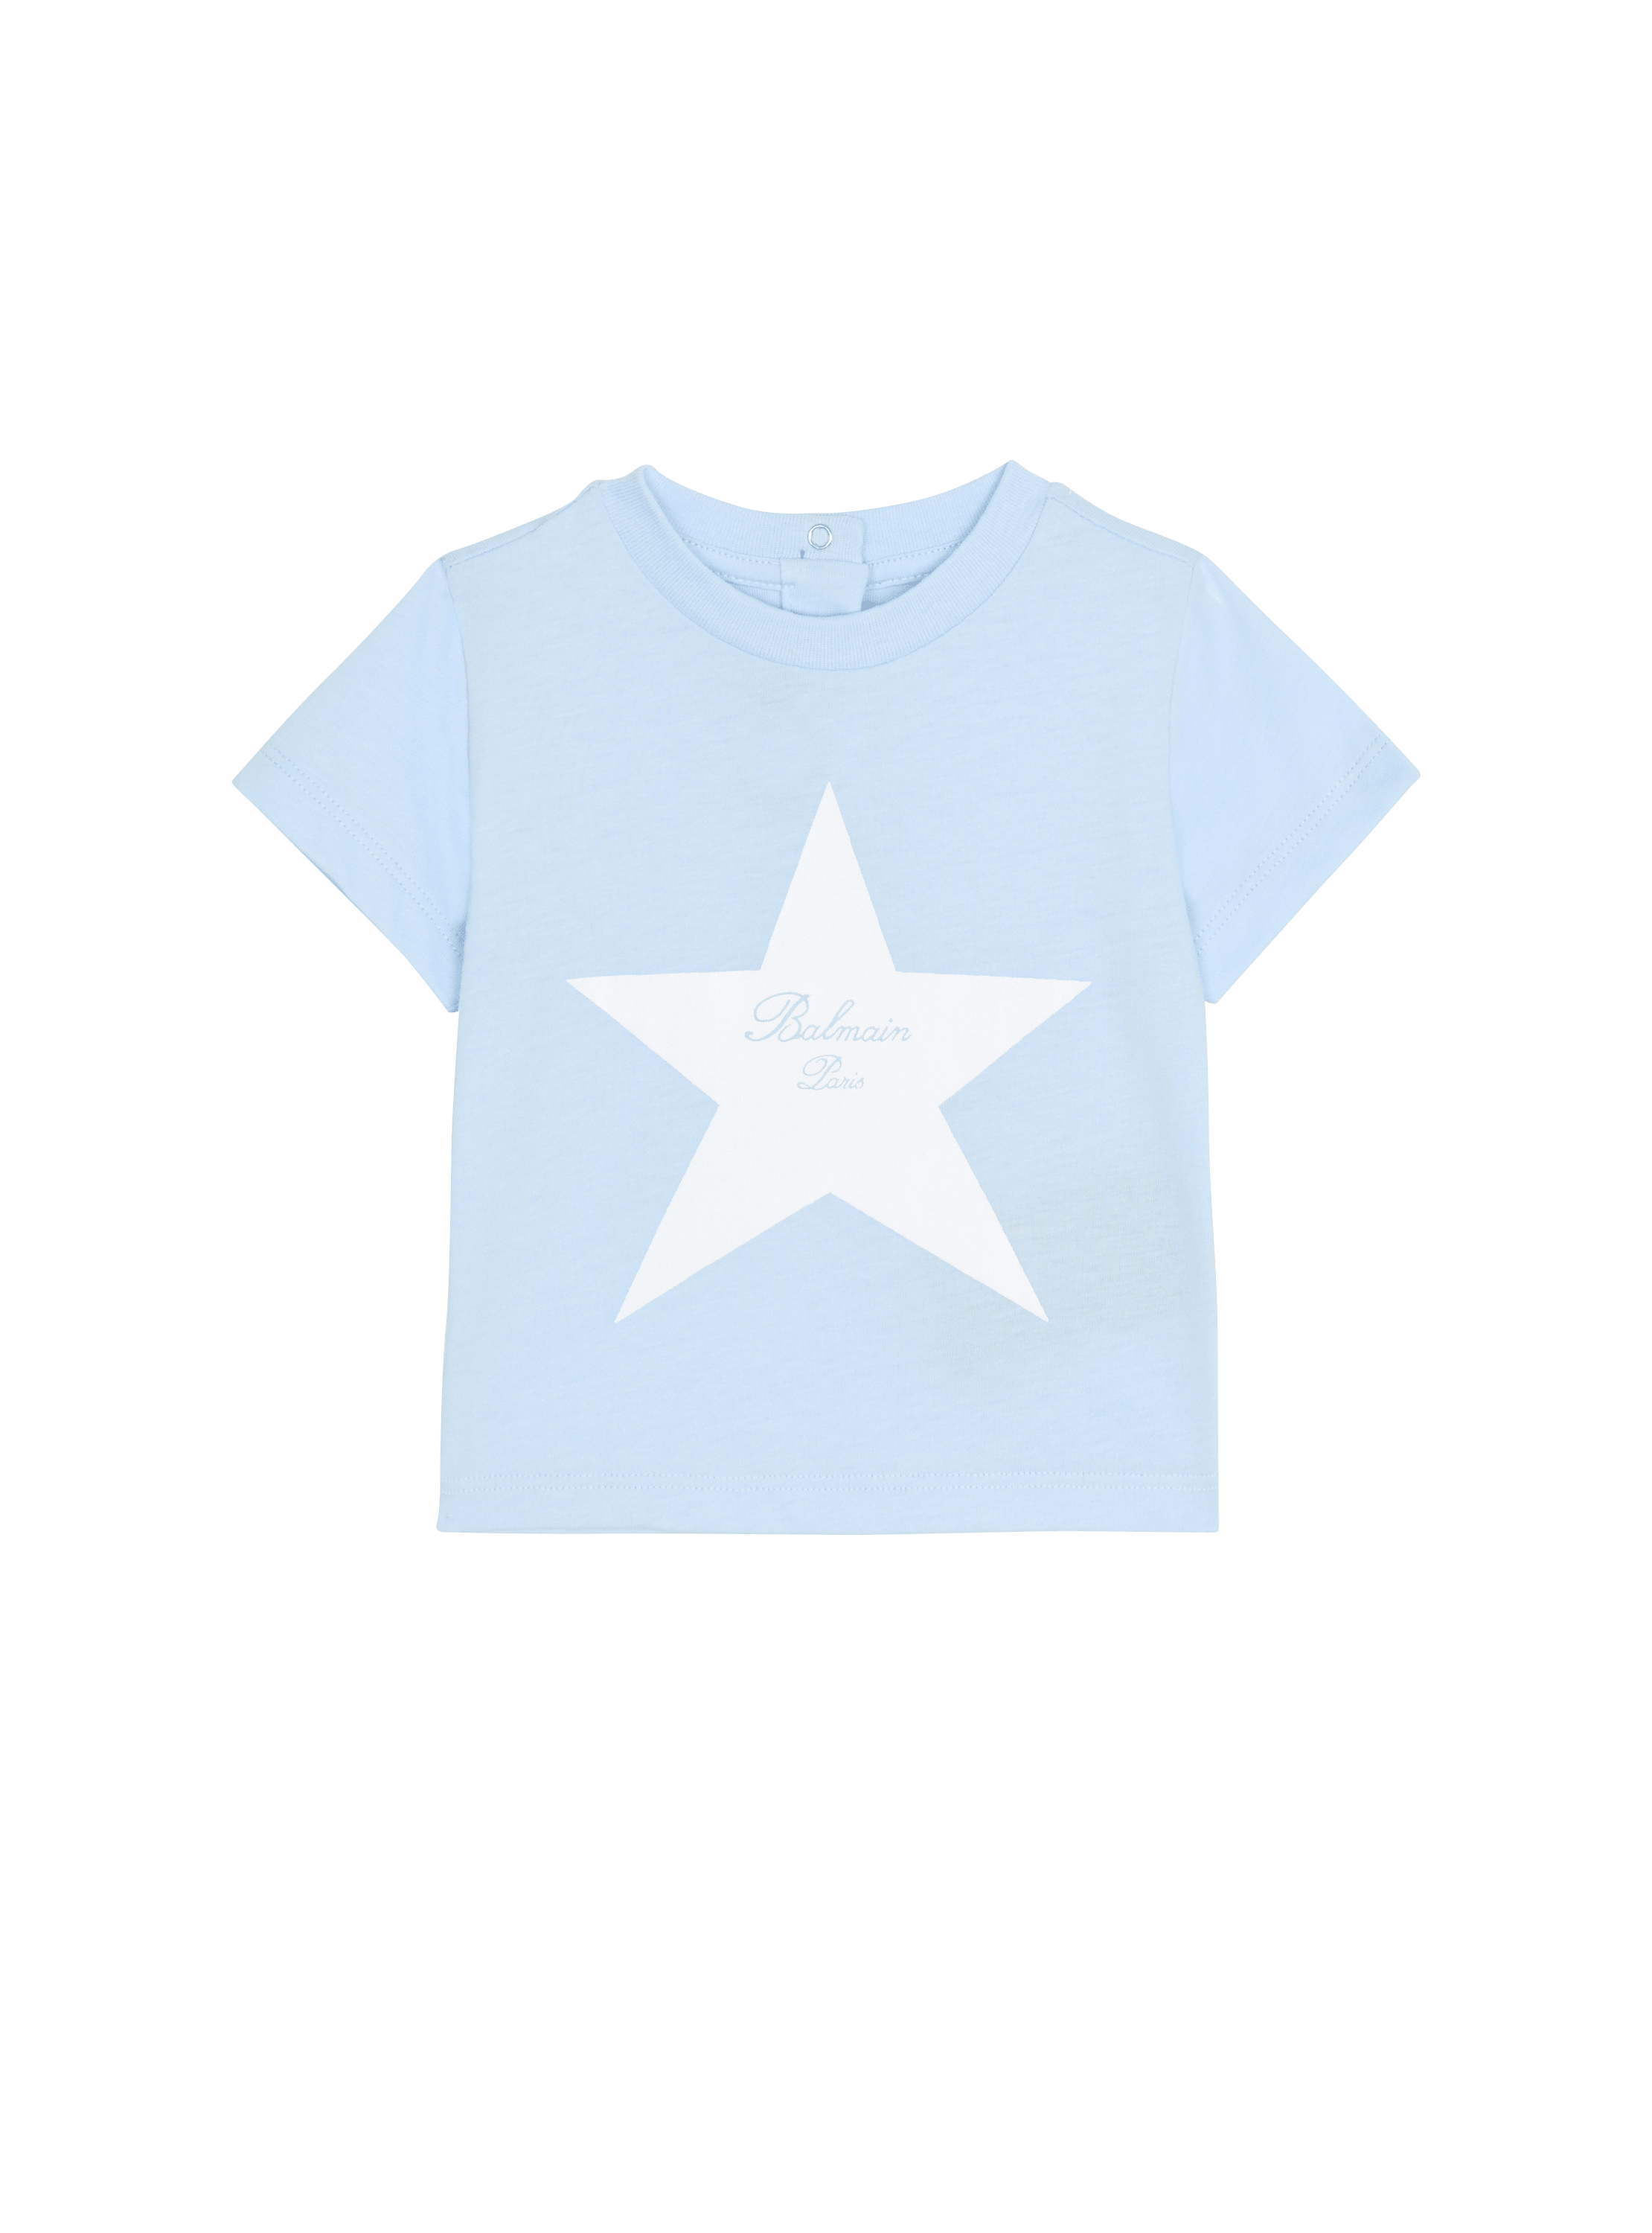 Camiseta Balmain Signature estrella